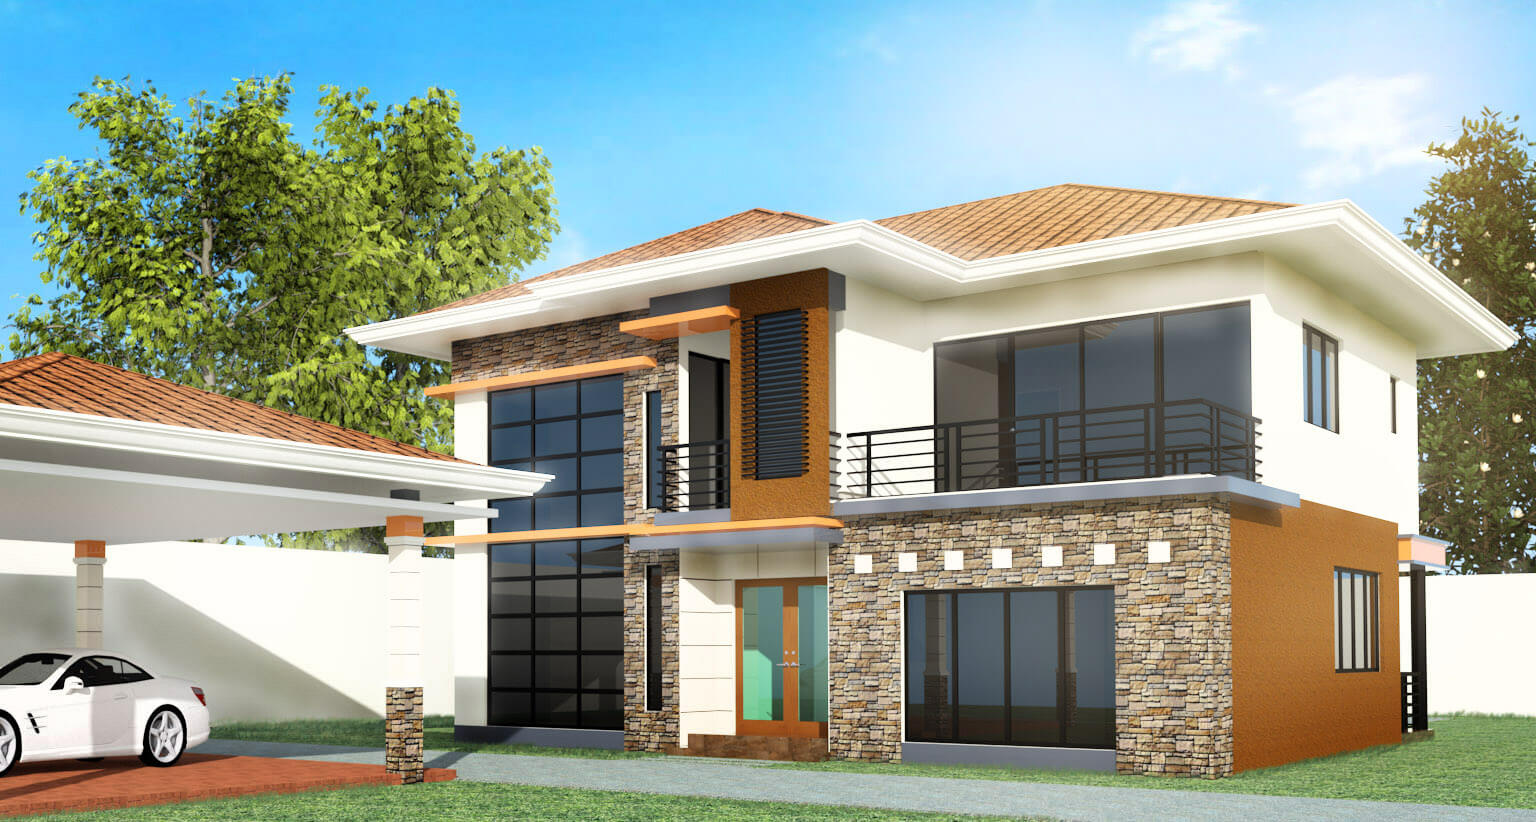 MODEL 4-3 BEDROOM, 2 STORY DESIGN - Negros Construction